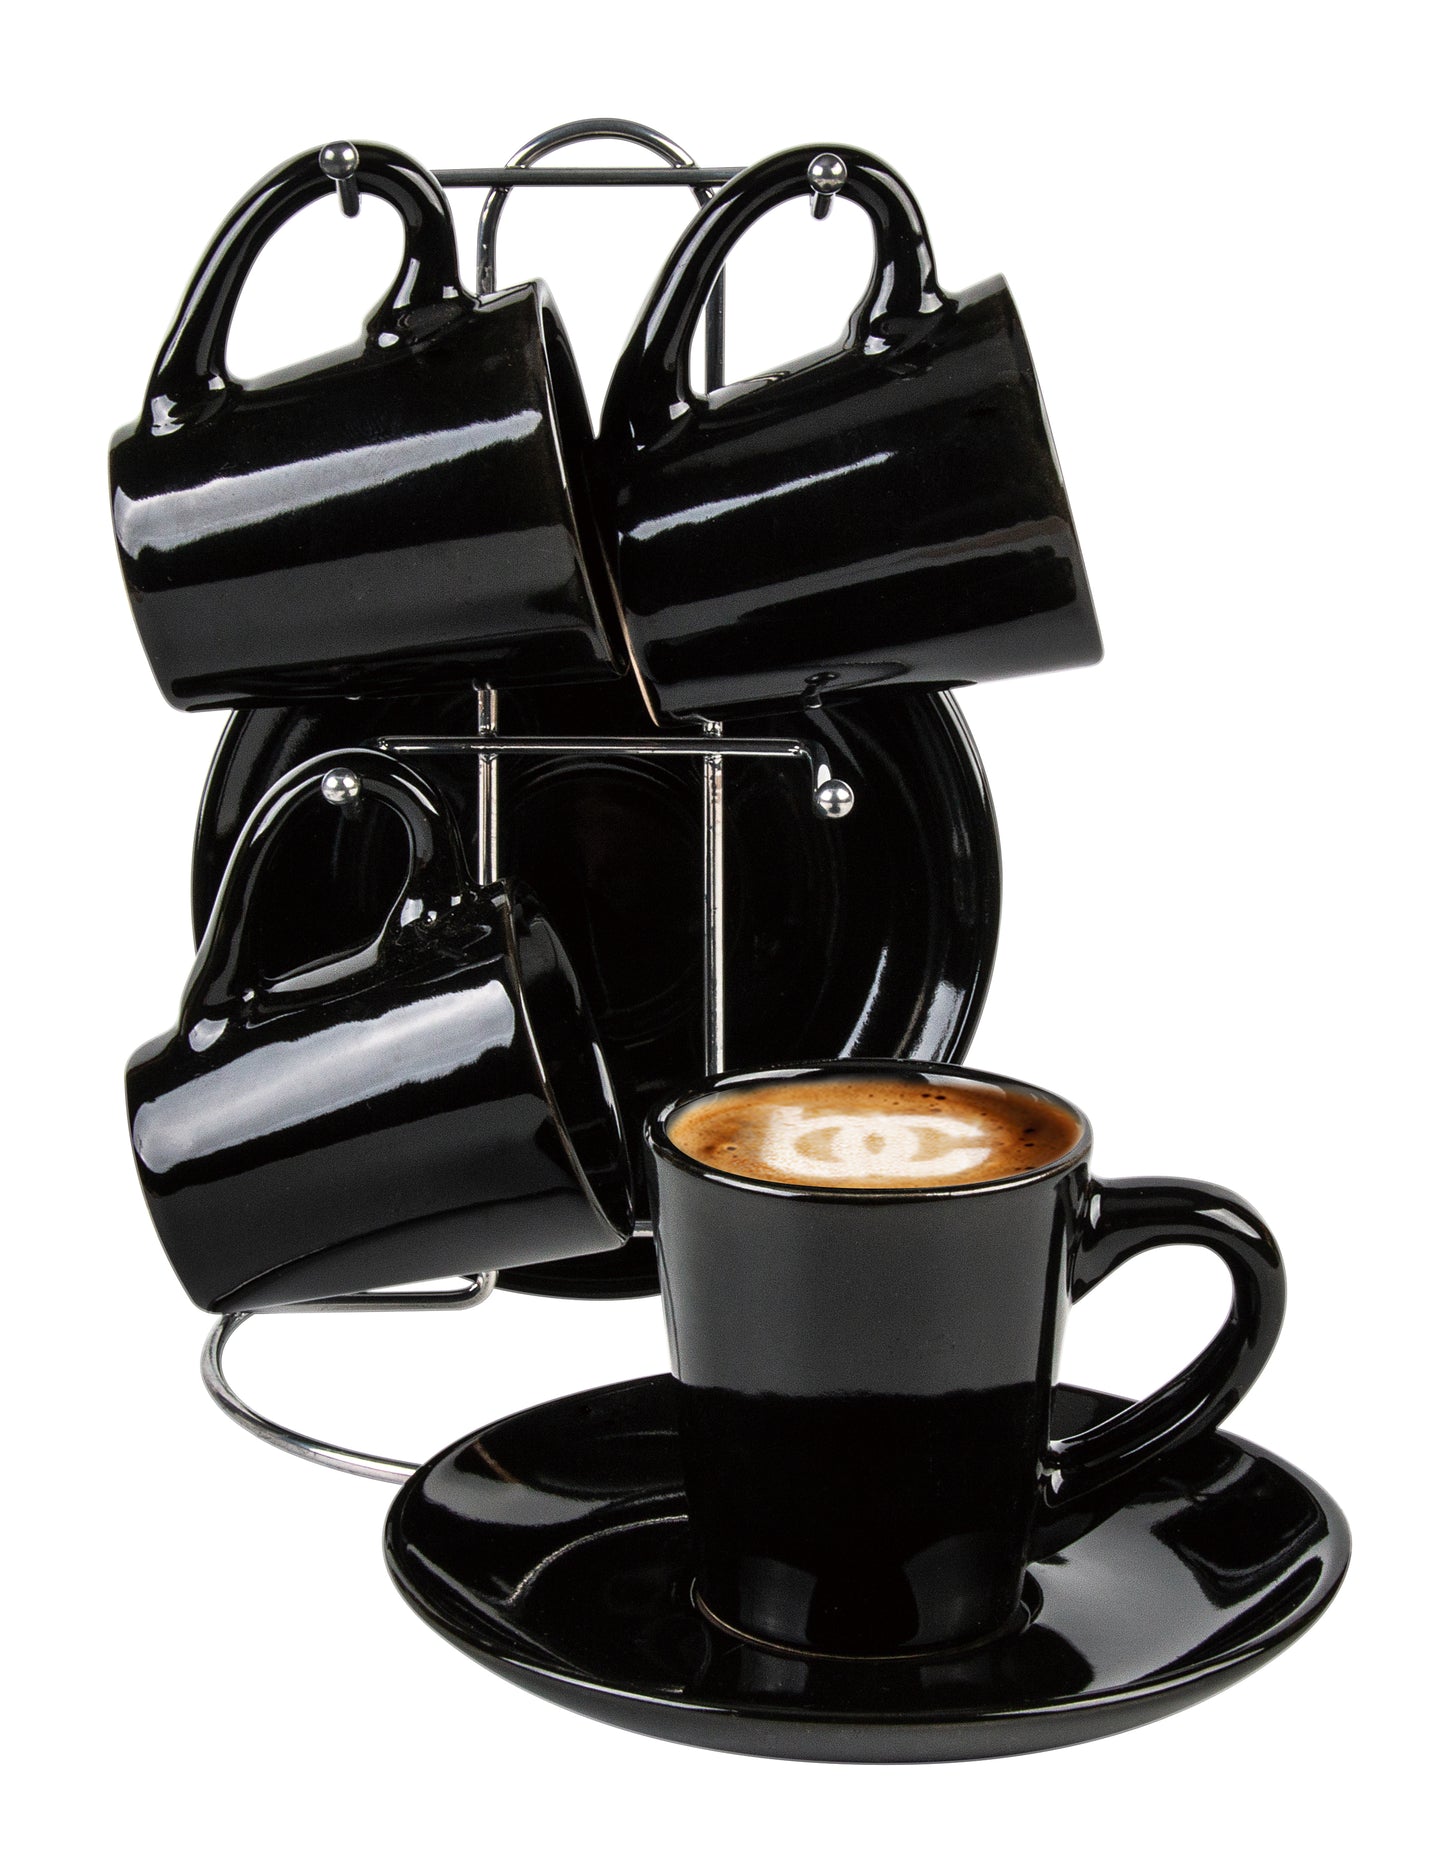 
                  
                    Bene Casa 9-piece Espresso set with metal stand, 4 espresso cup set, cup and saucer set,4-person espresso set, dishwasher safe, High Glaze Coffee Logo
                  
                